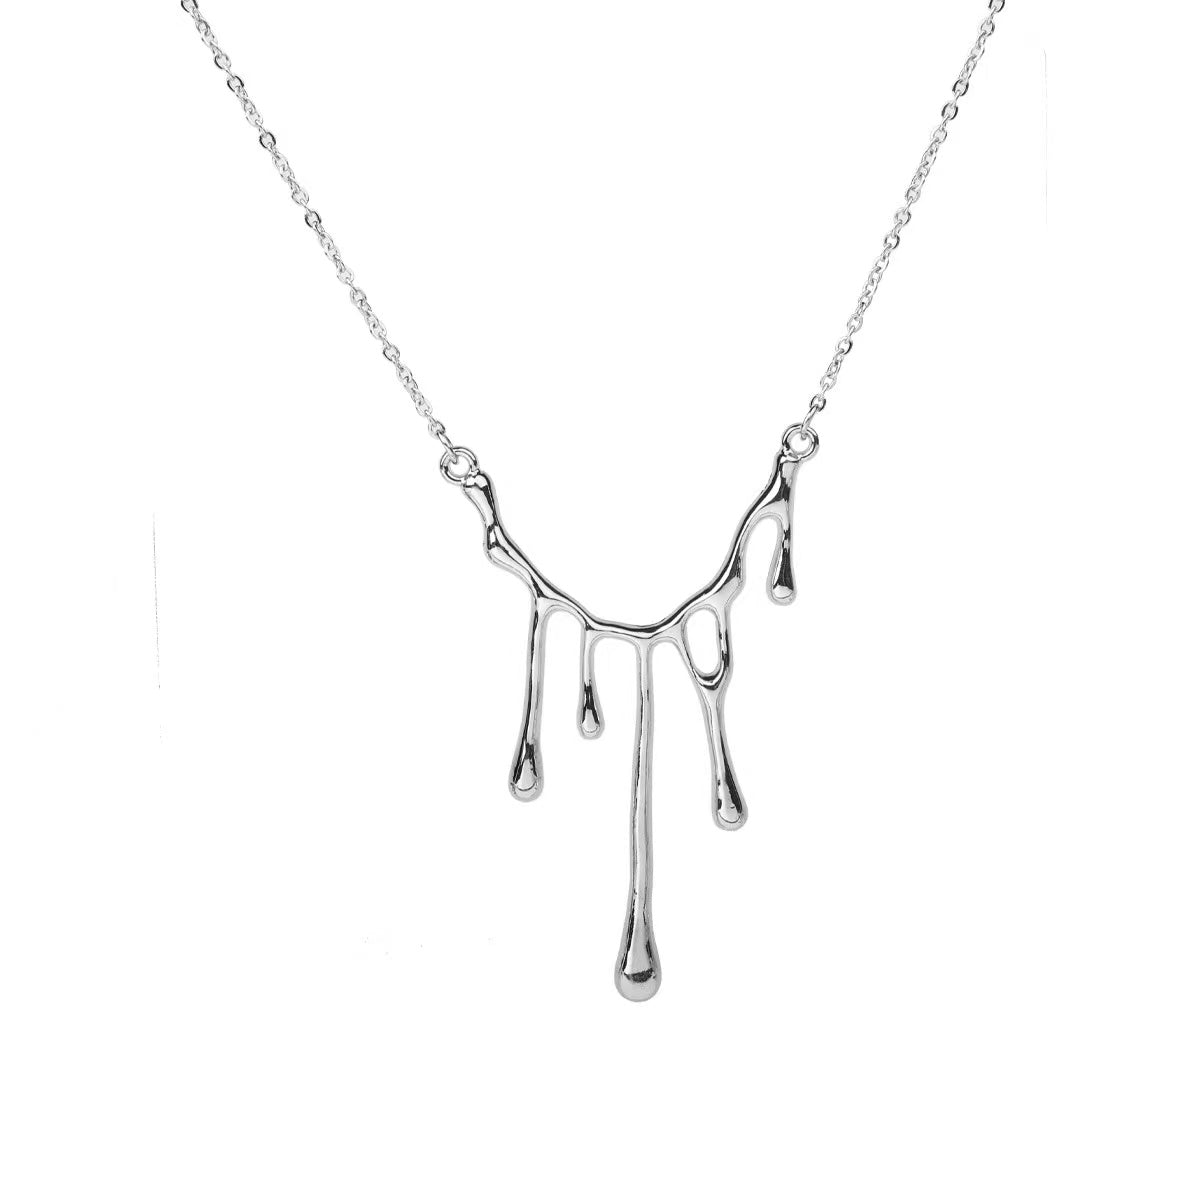 N7 Fluid Flow Silver Necklace